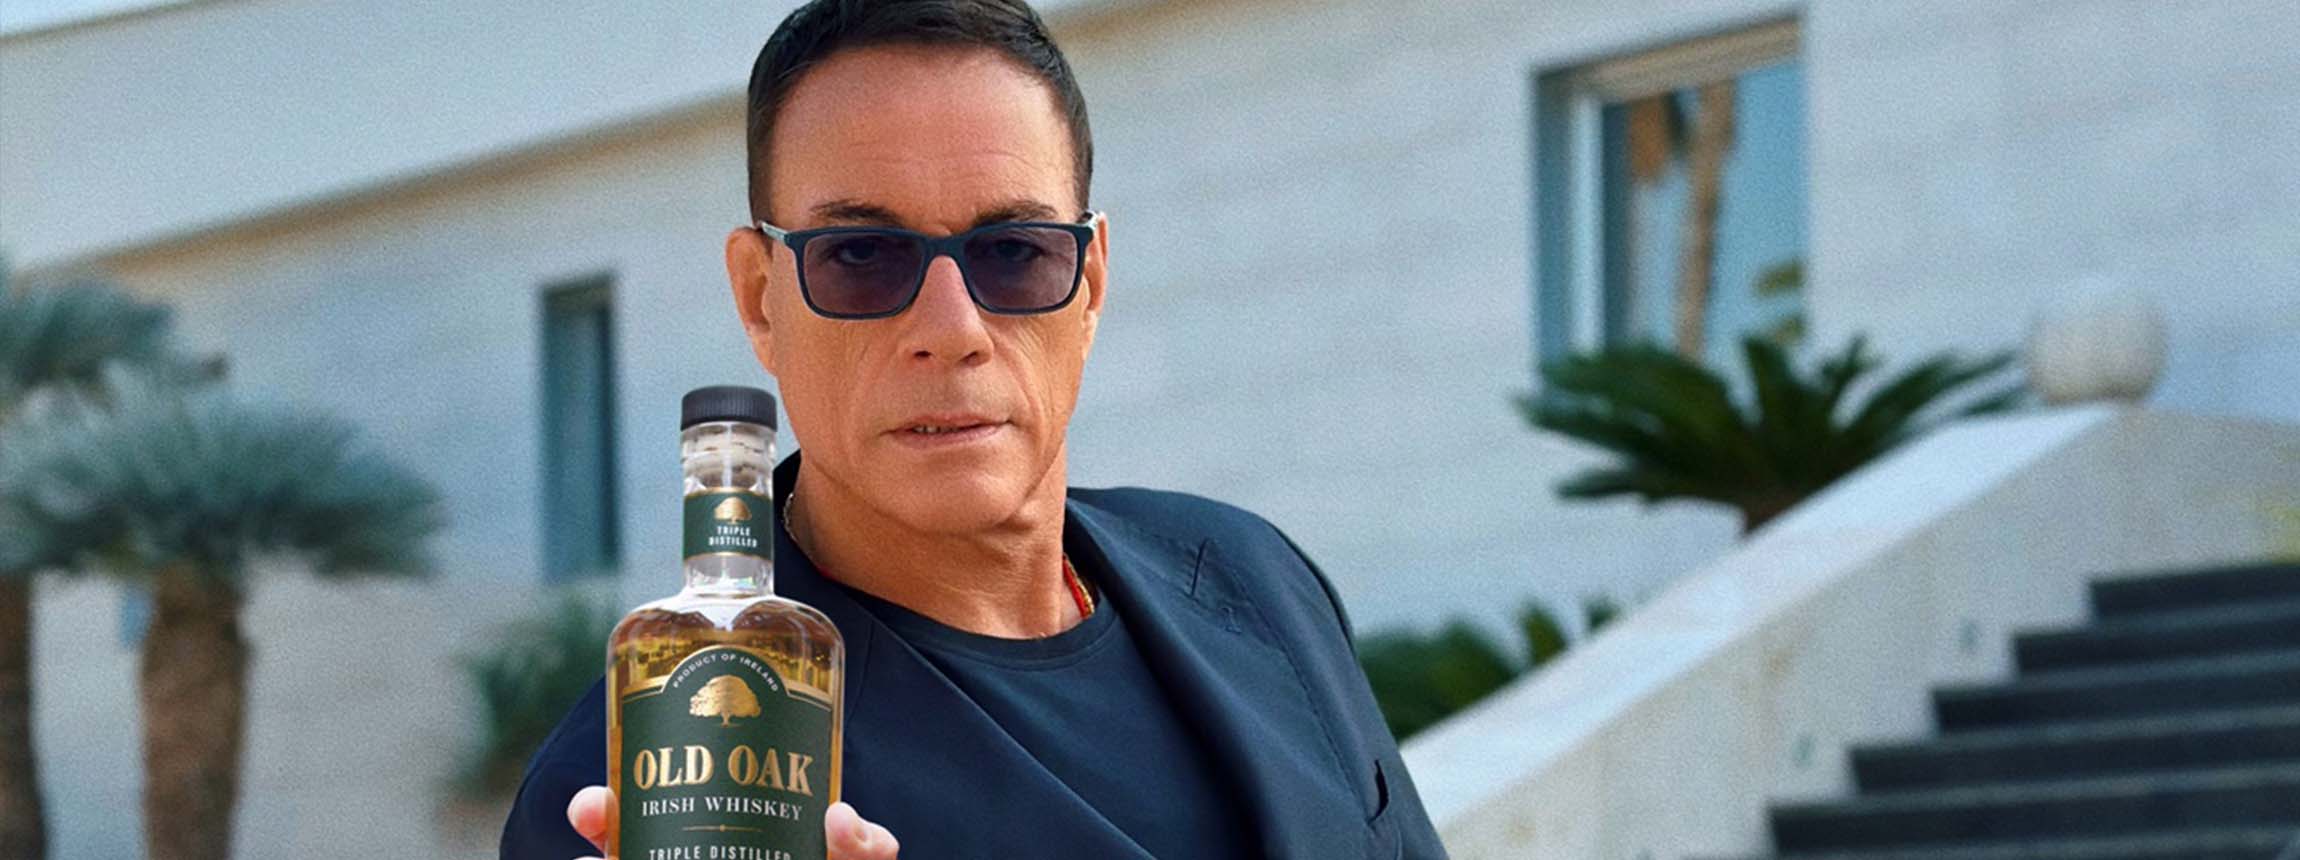 Jean-Claude Van Damme old oak whiskey